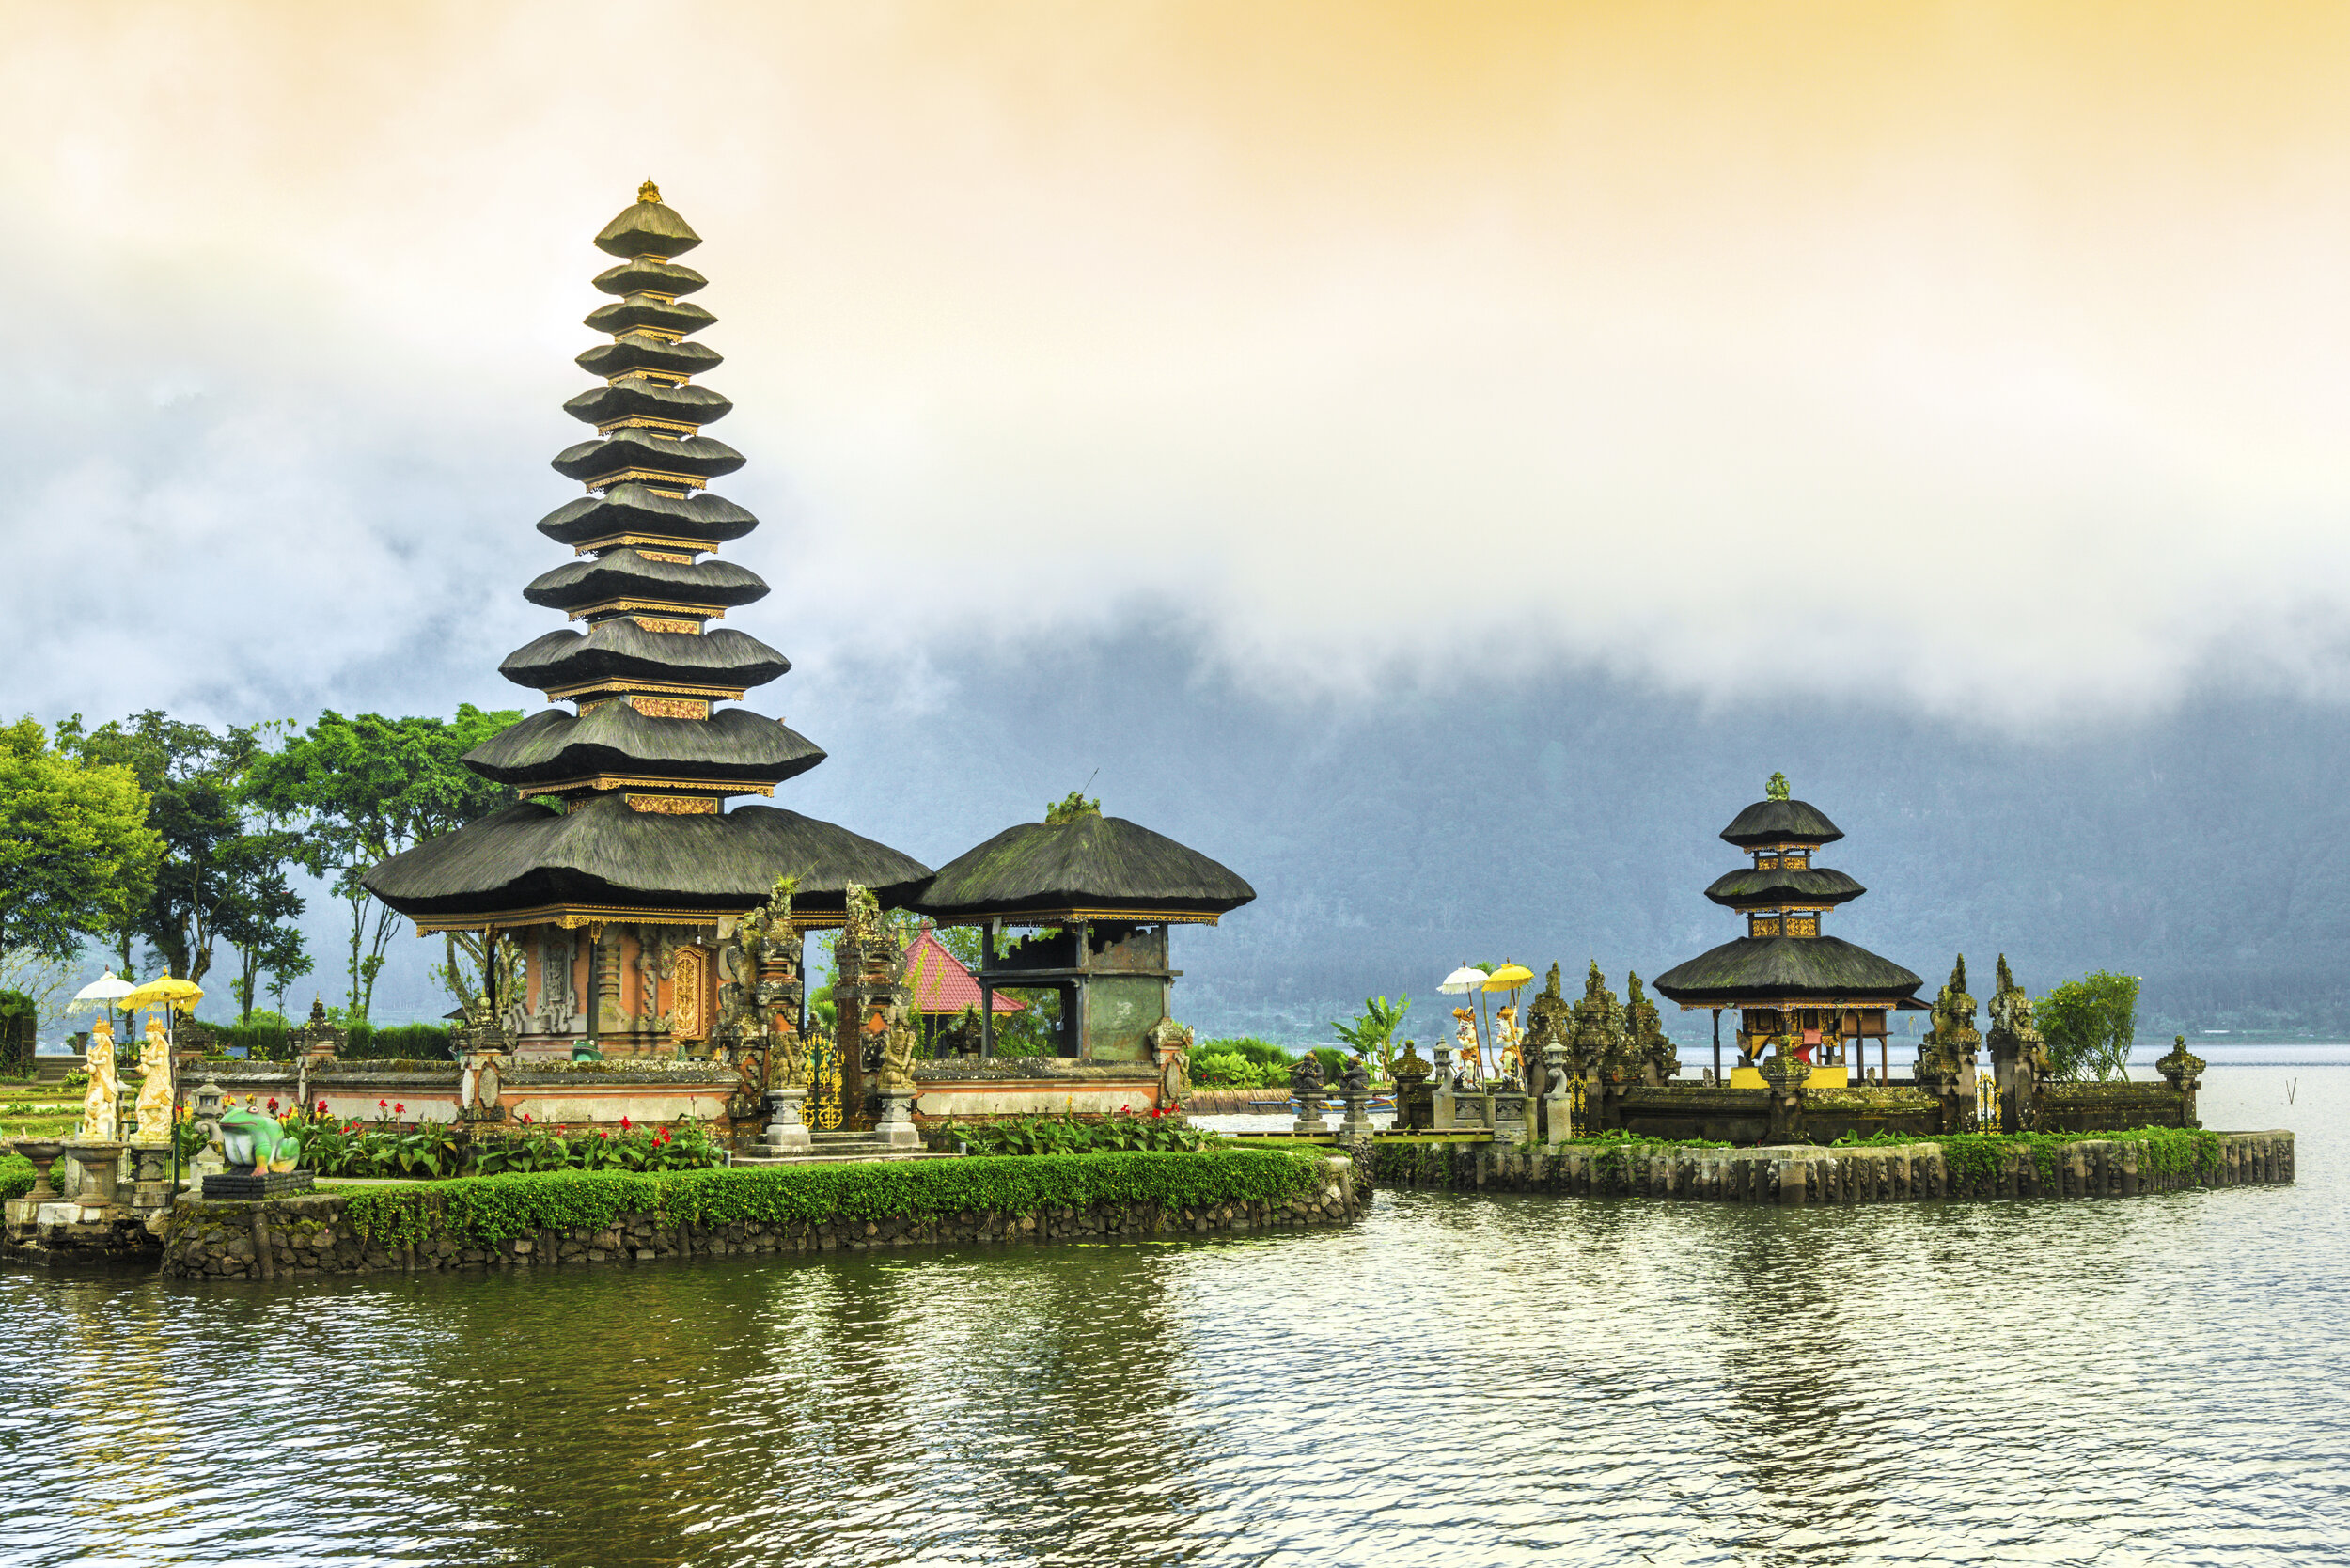 Bali_Pura_Ulun_Danu_Water_Temple.jpg